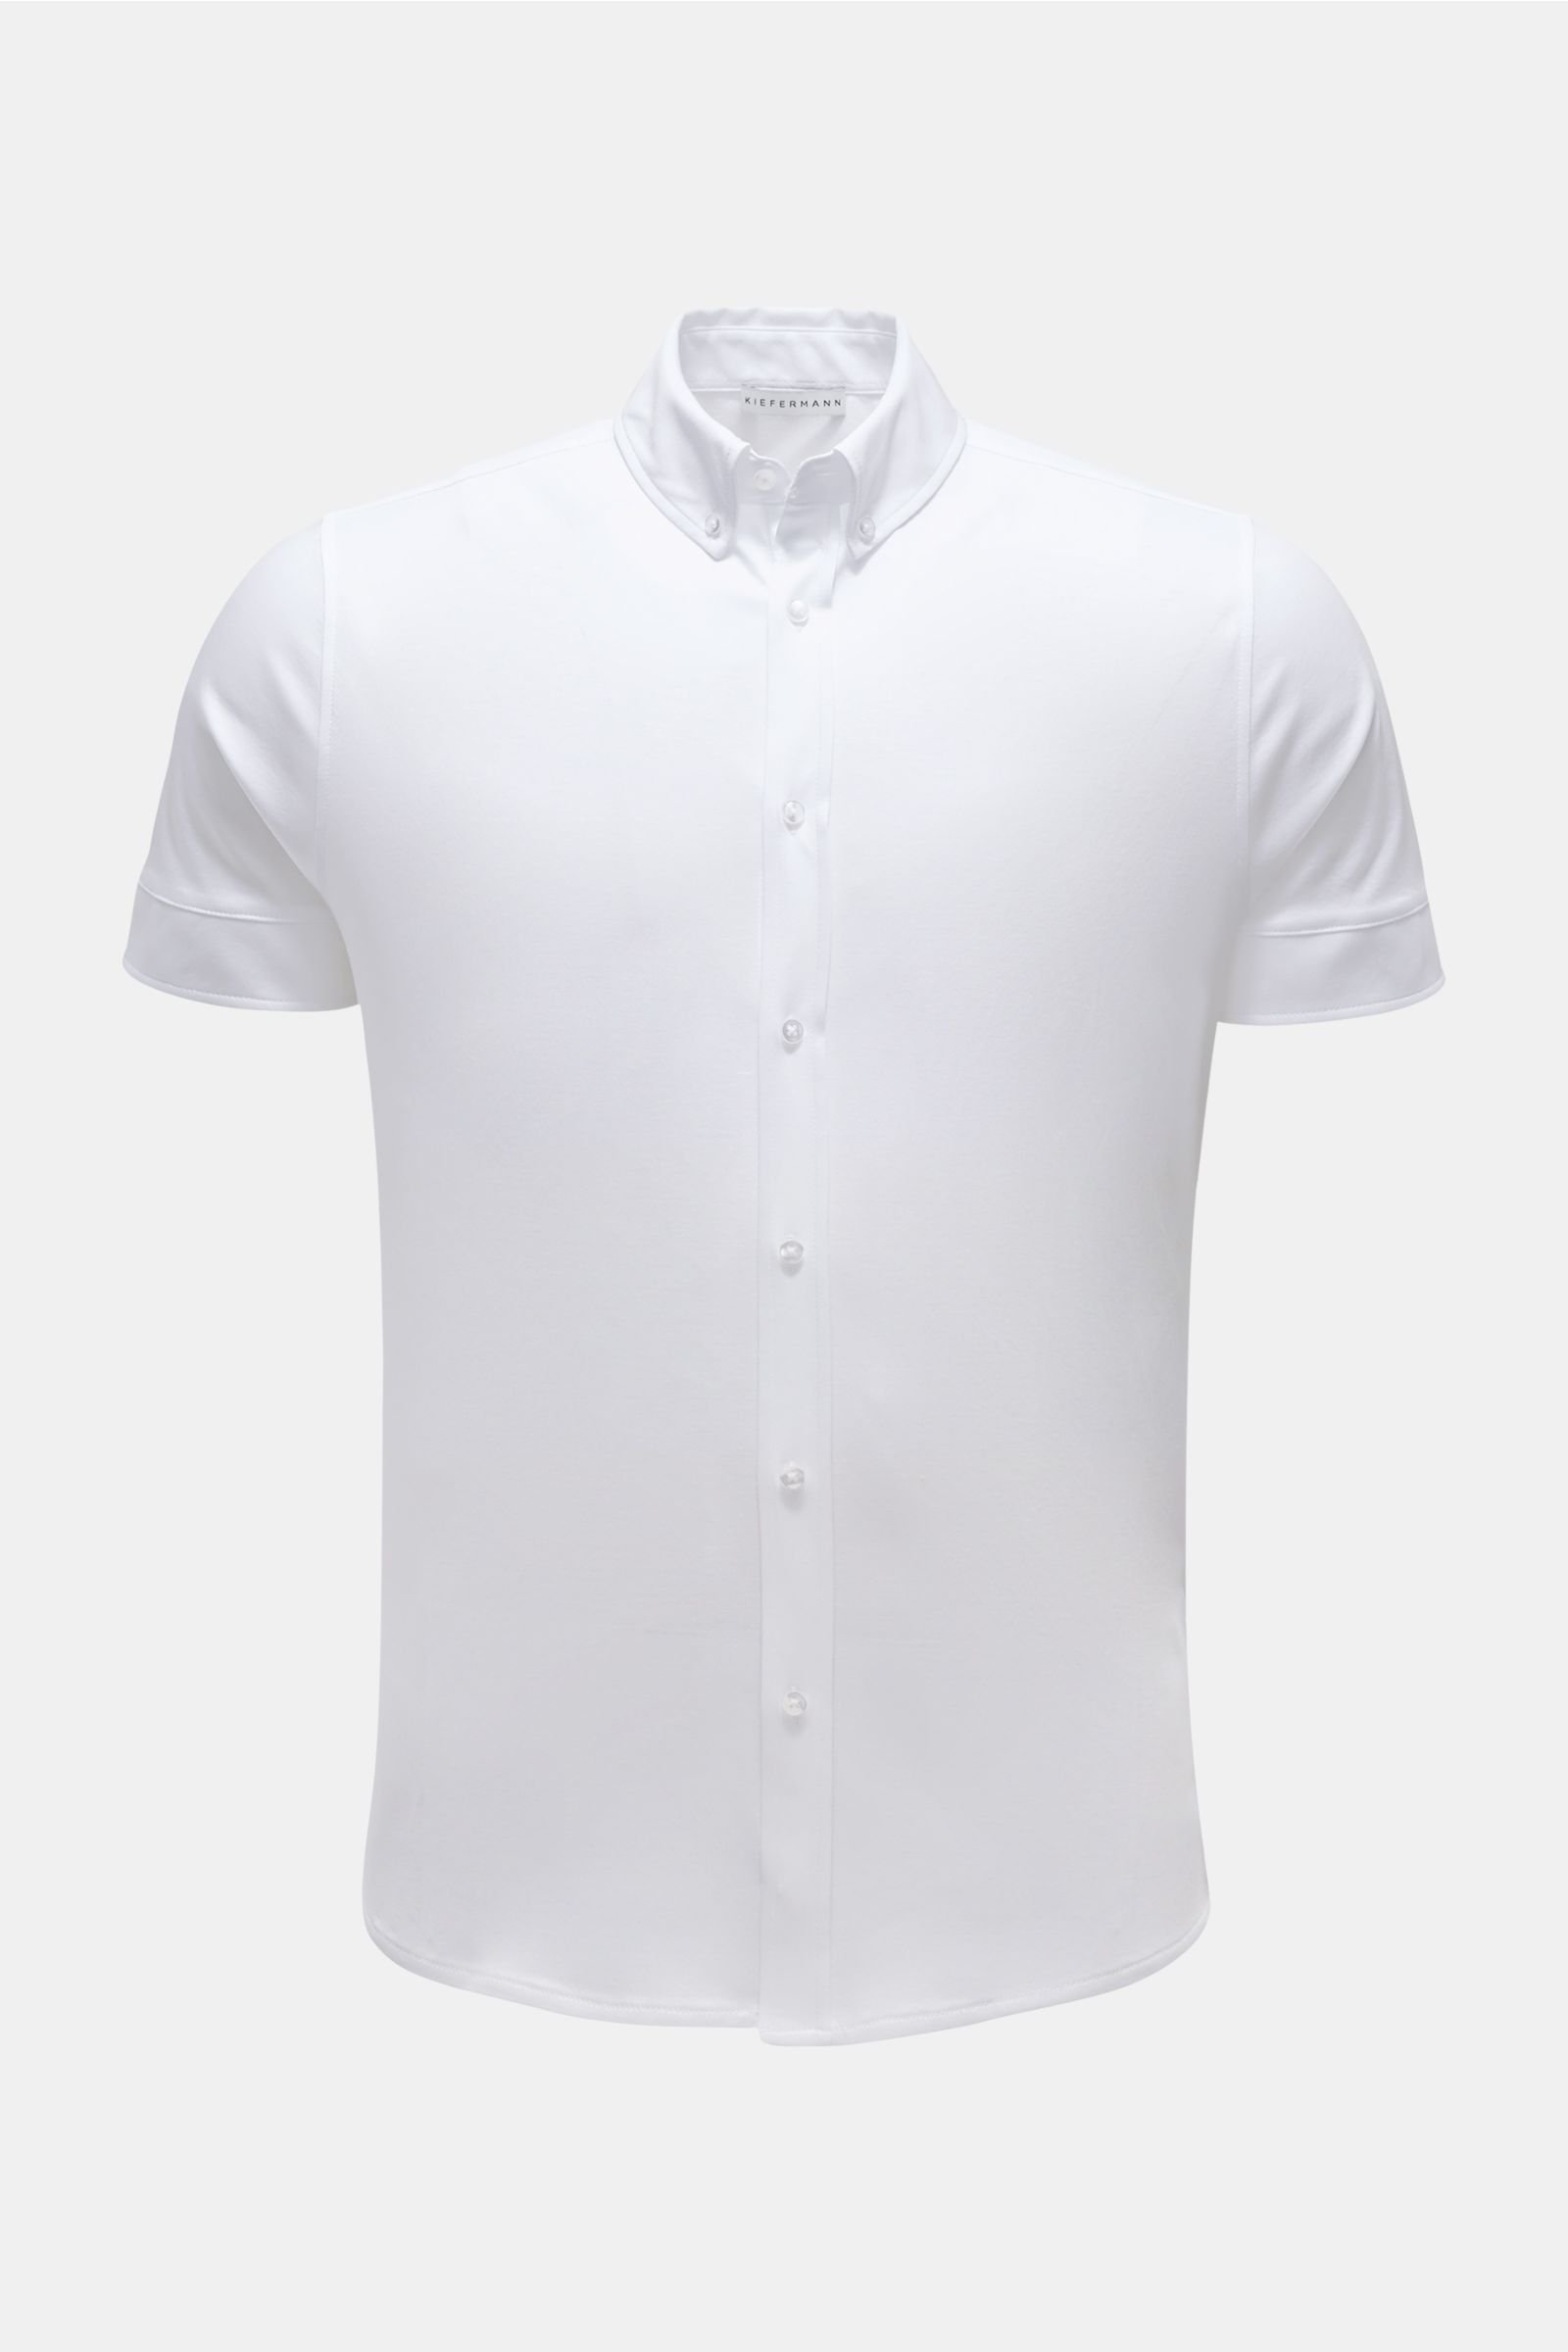 Jersey short sleeve shirt 'Ingo' button-down collar white